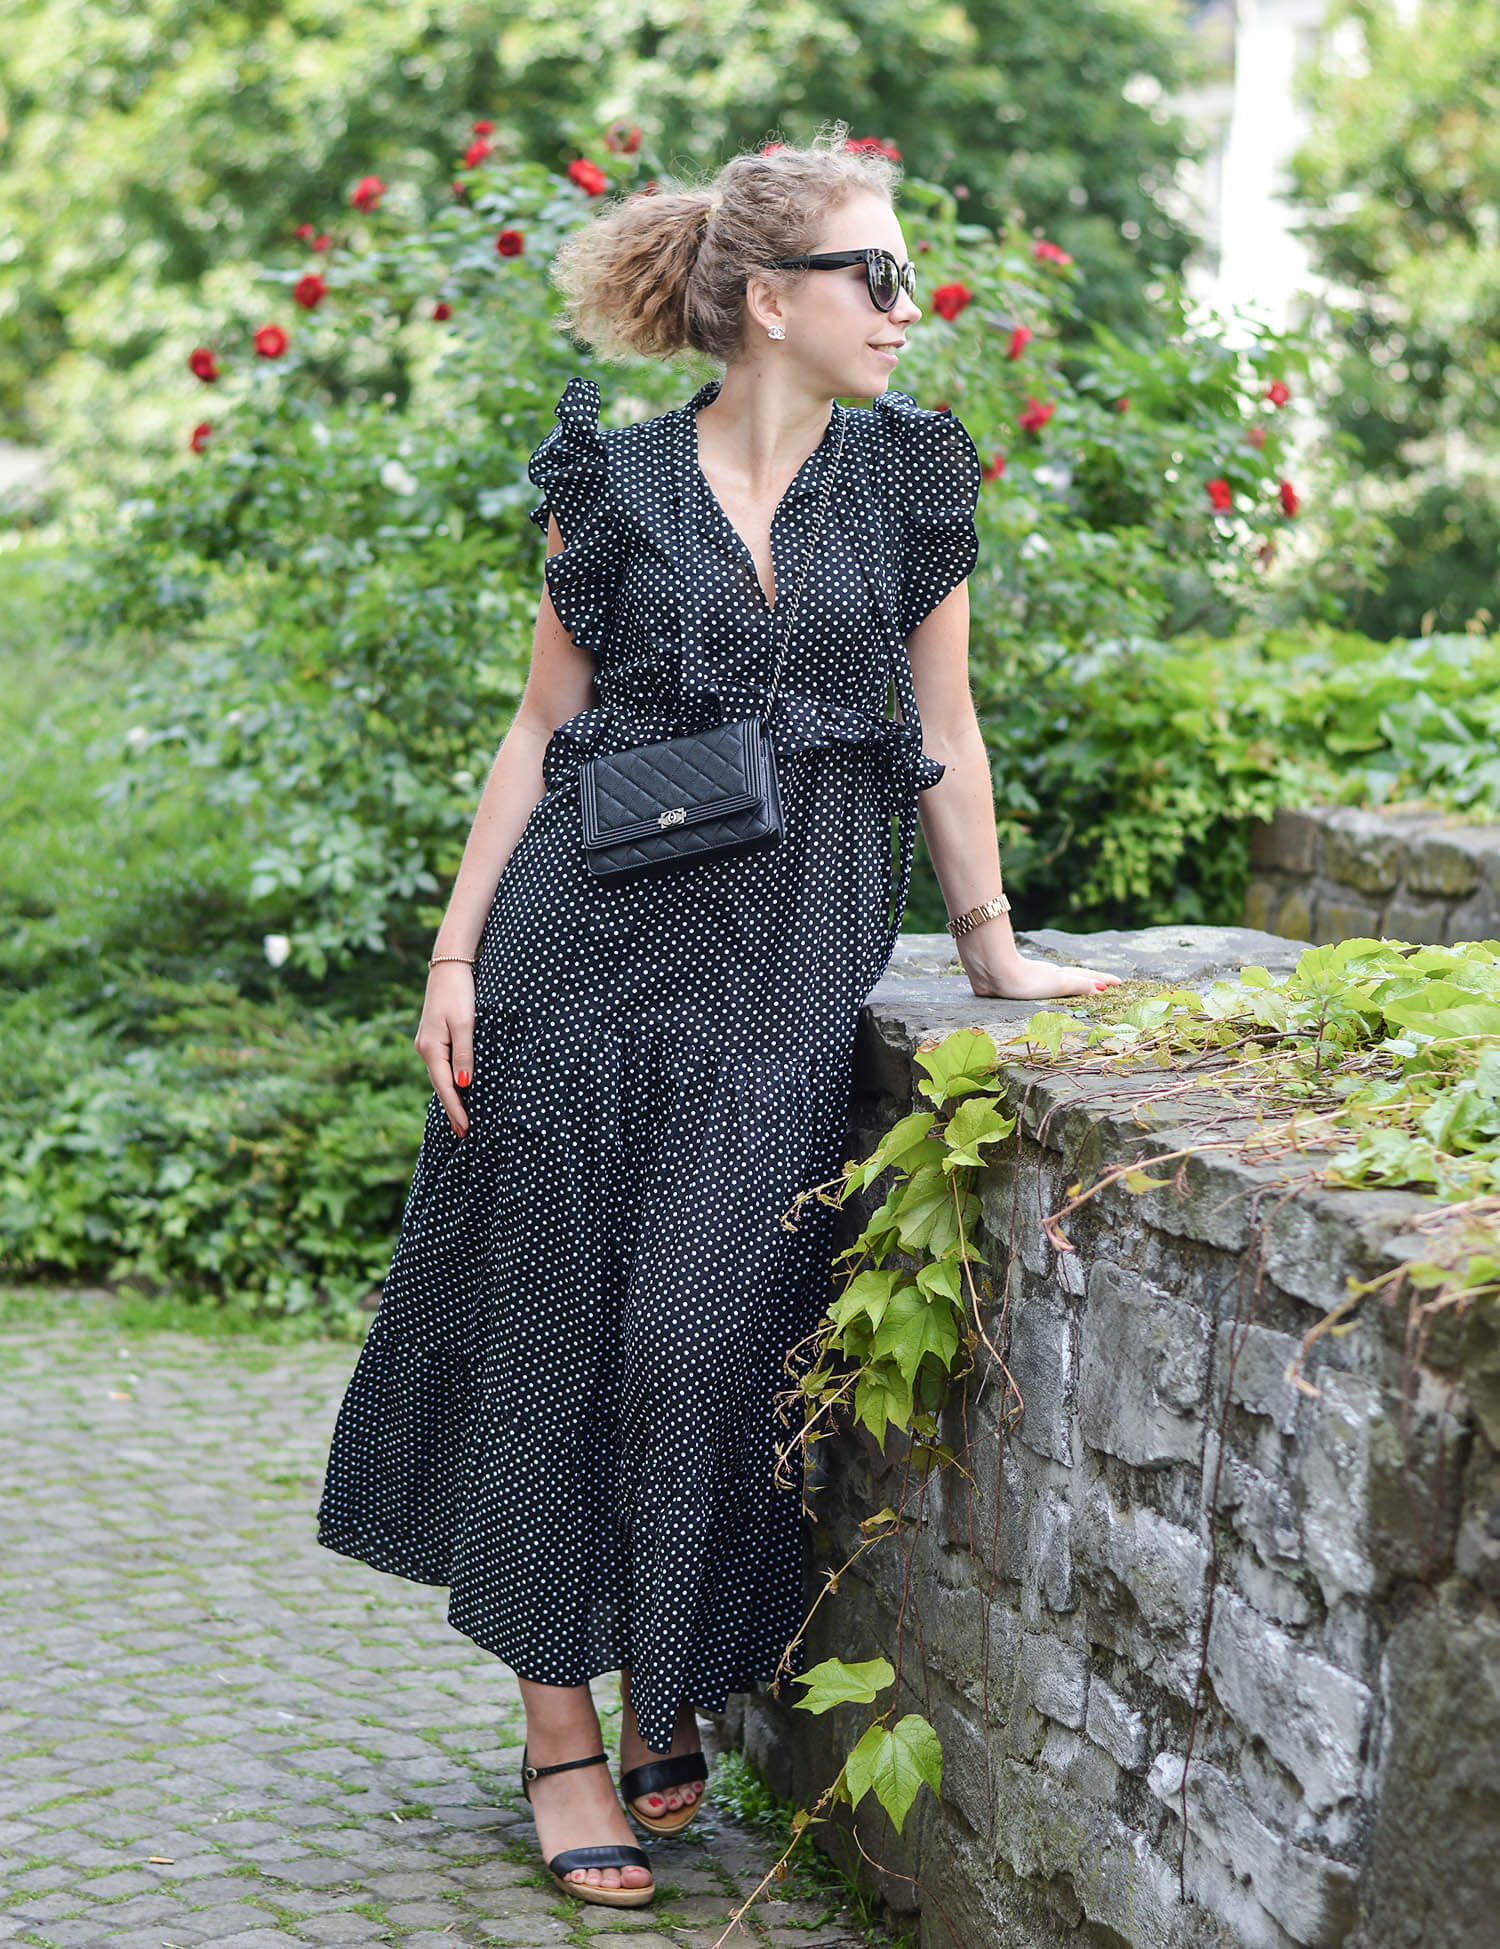 Polka-Dots-Maxidress-Summer-Outfit-Kationette-Fashionblogger-NRW